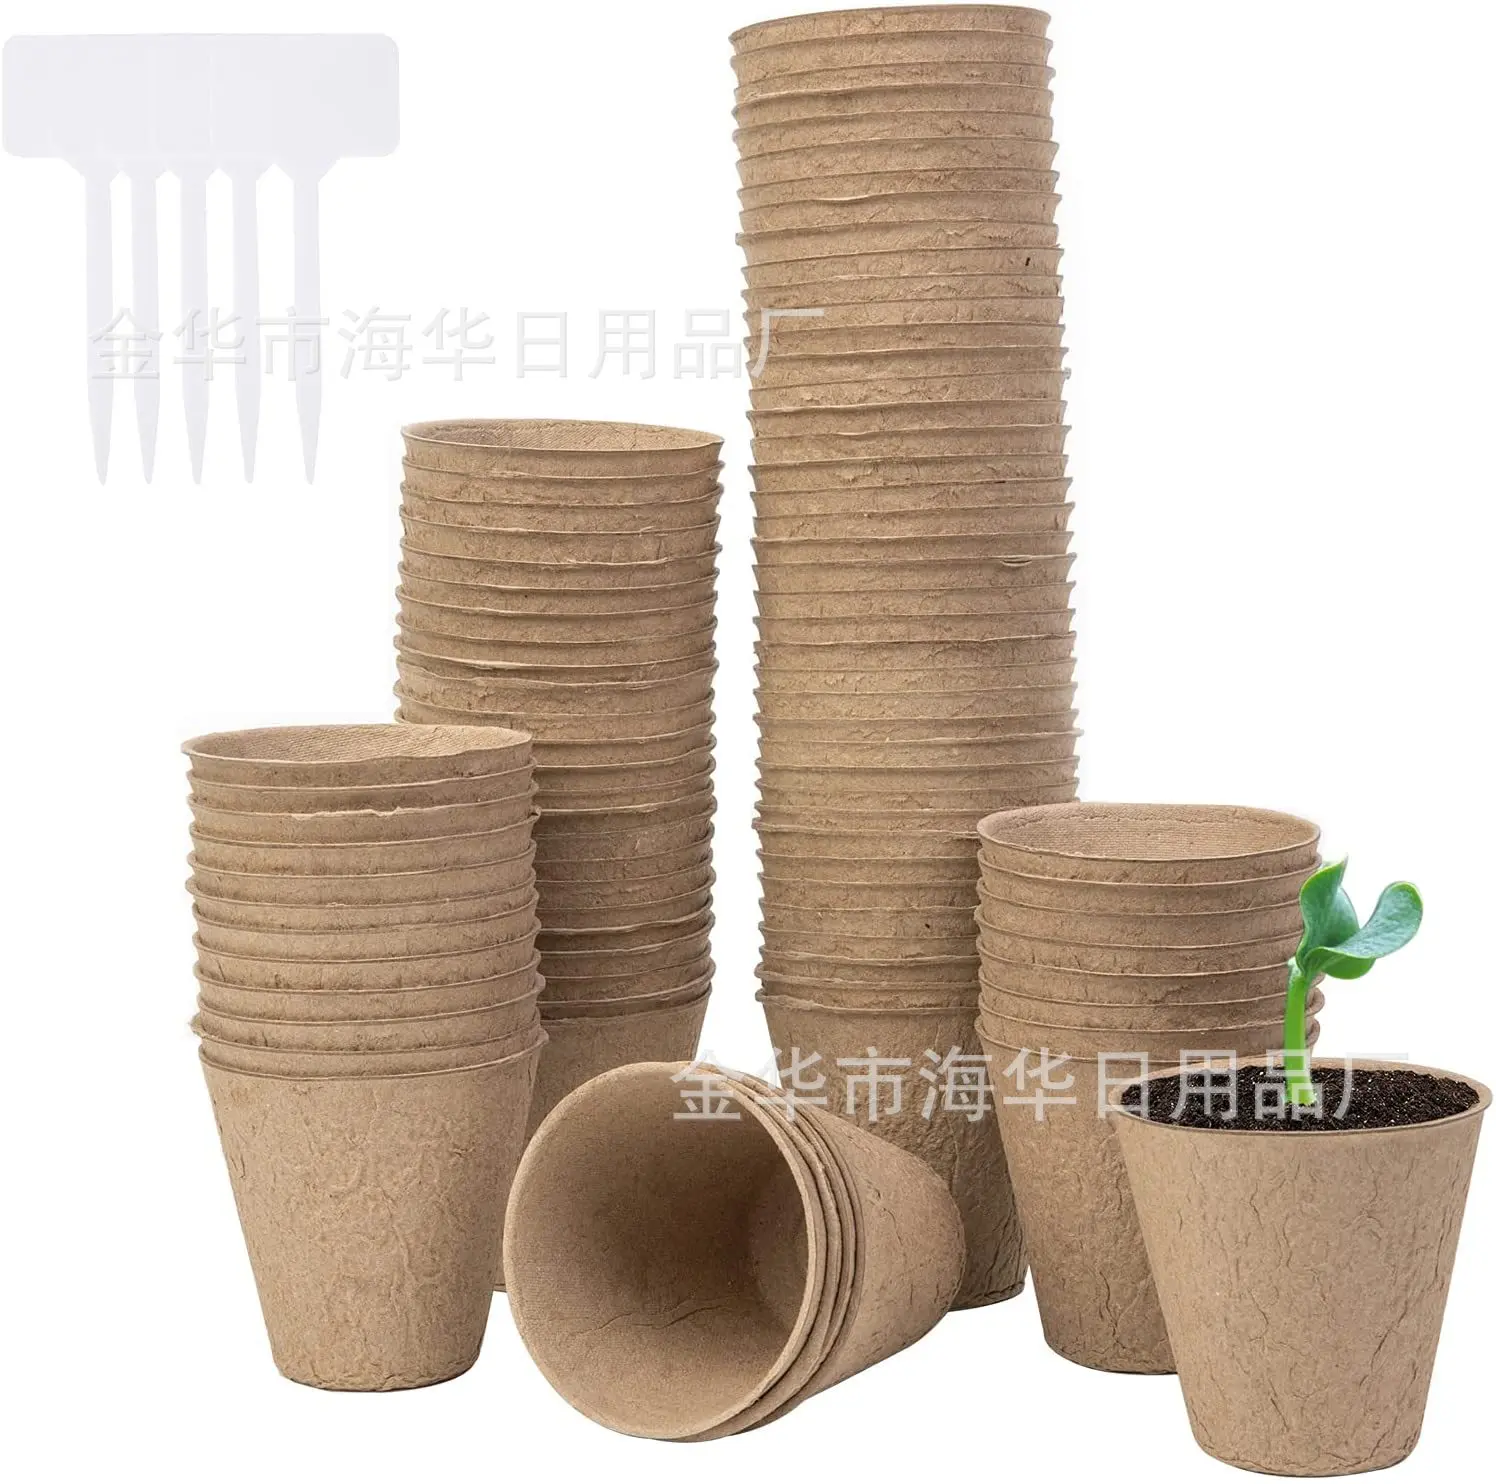 

50Pcs Round Biodegradable Seedling Pots Paper Pulp Flowerpot Garden Balcony Succulent Plant Cultivation Tray Nursery Cup